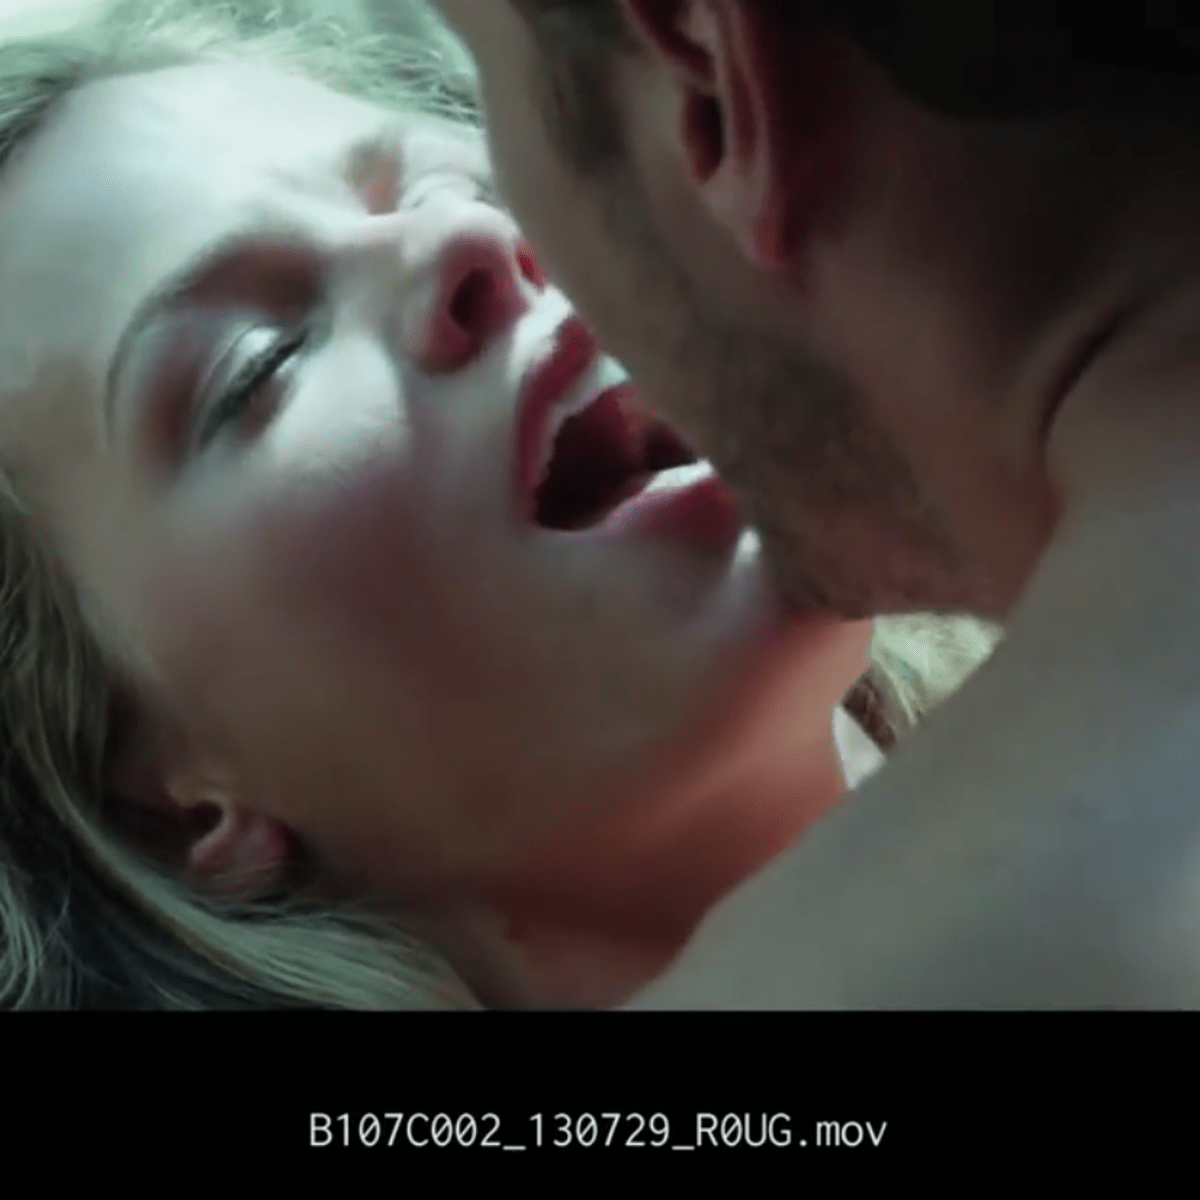 Hollywood movie sex scene